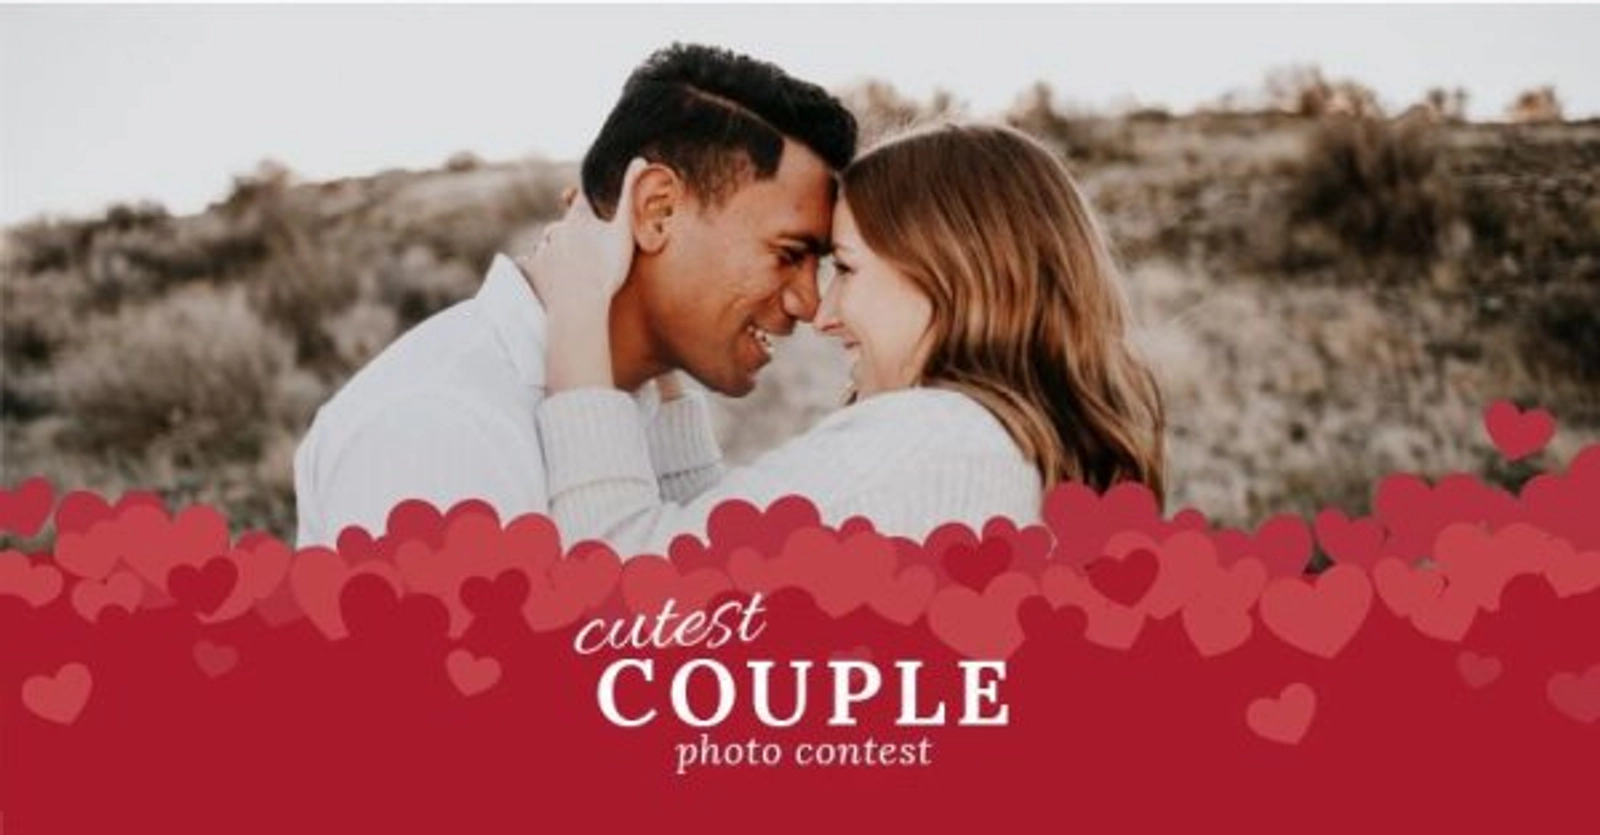 Cutest Couple Photo Contest - Thumbnail Image